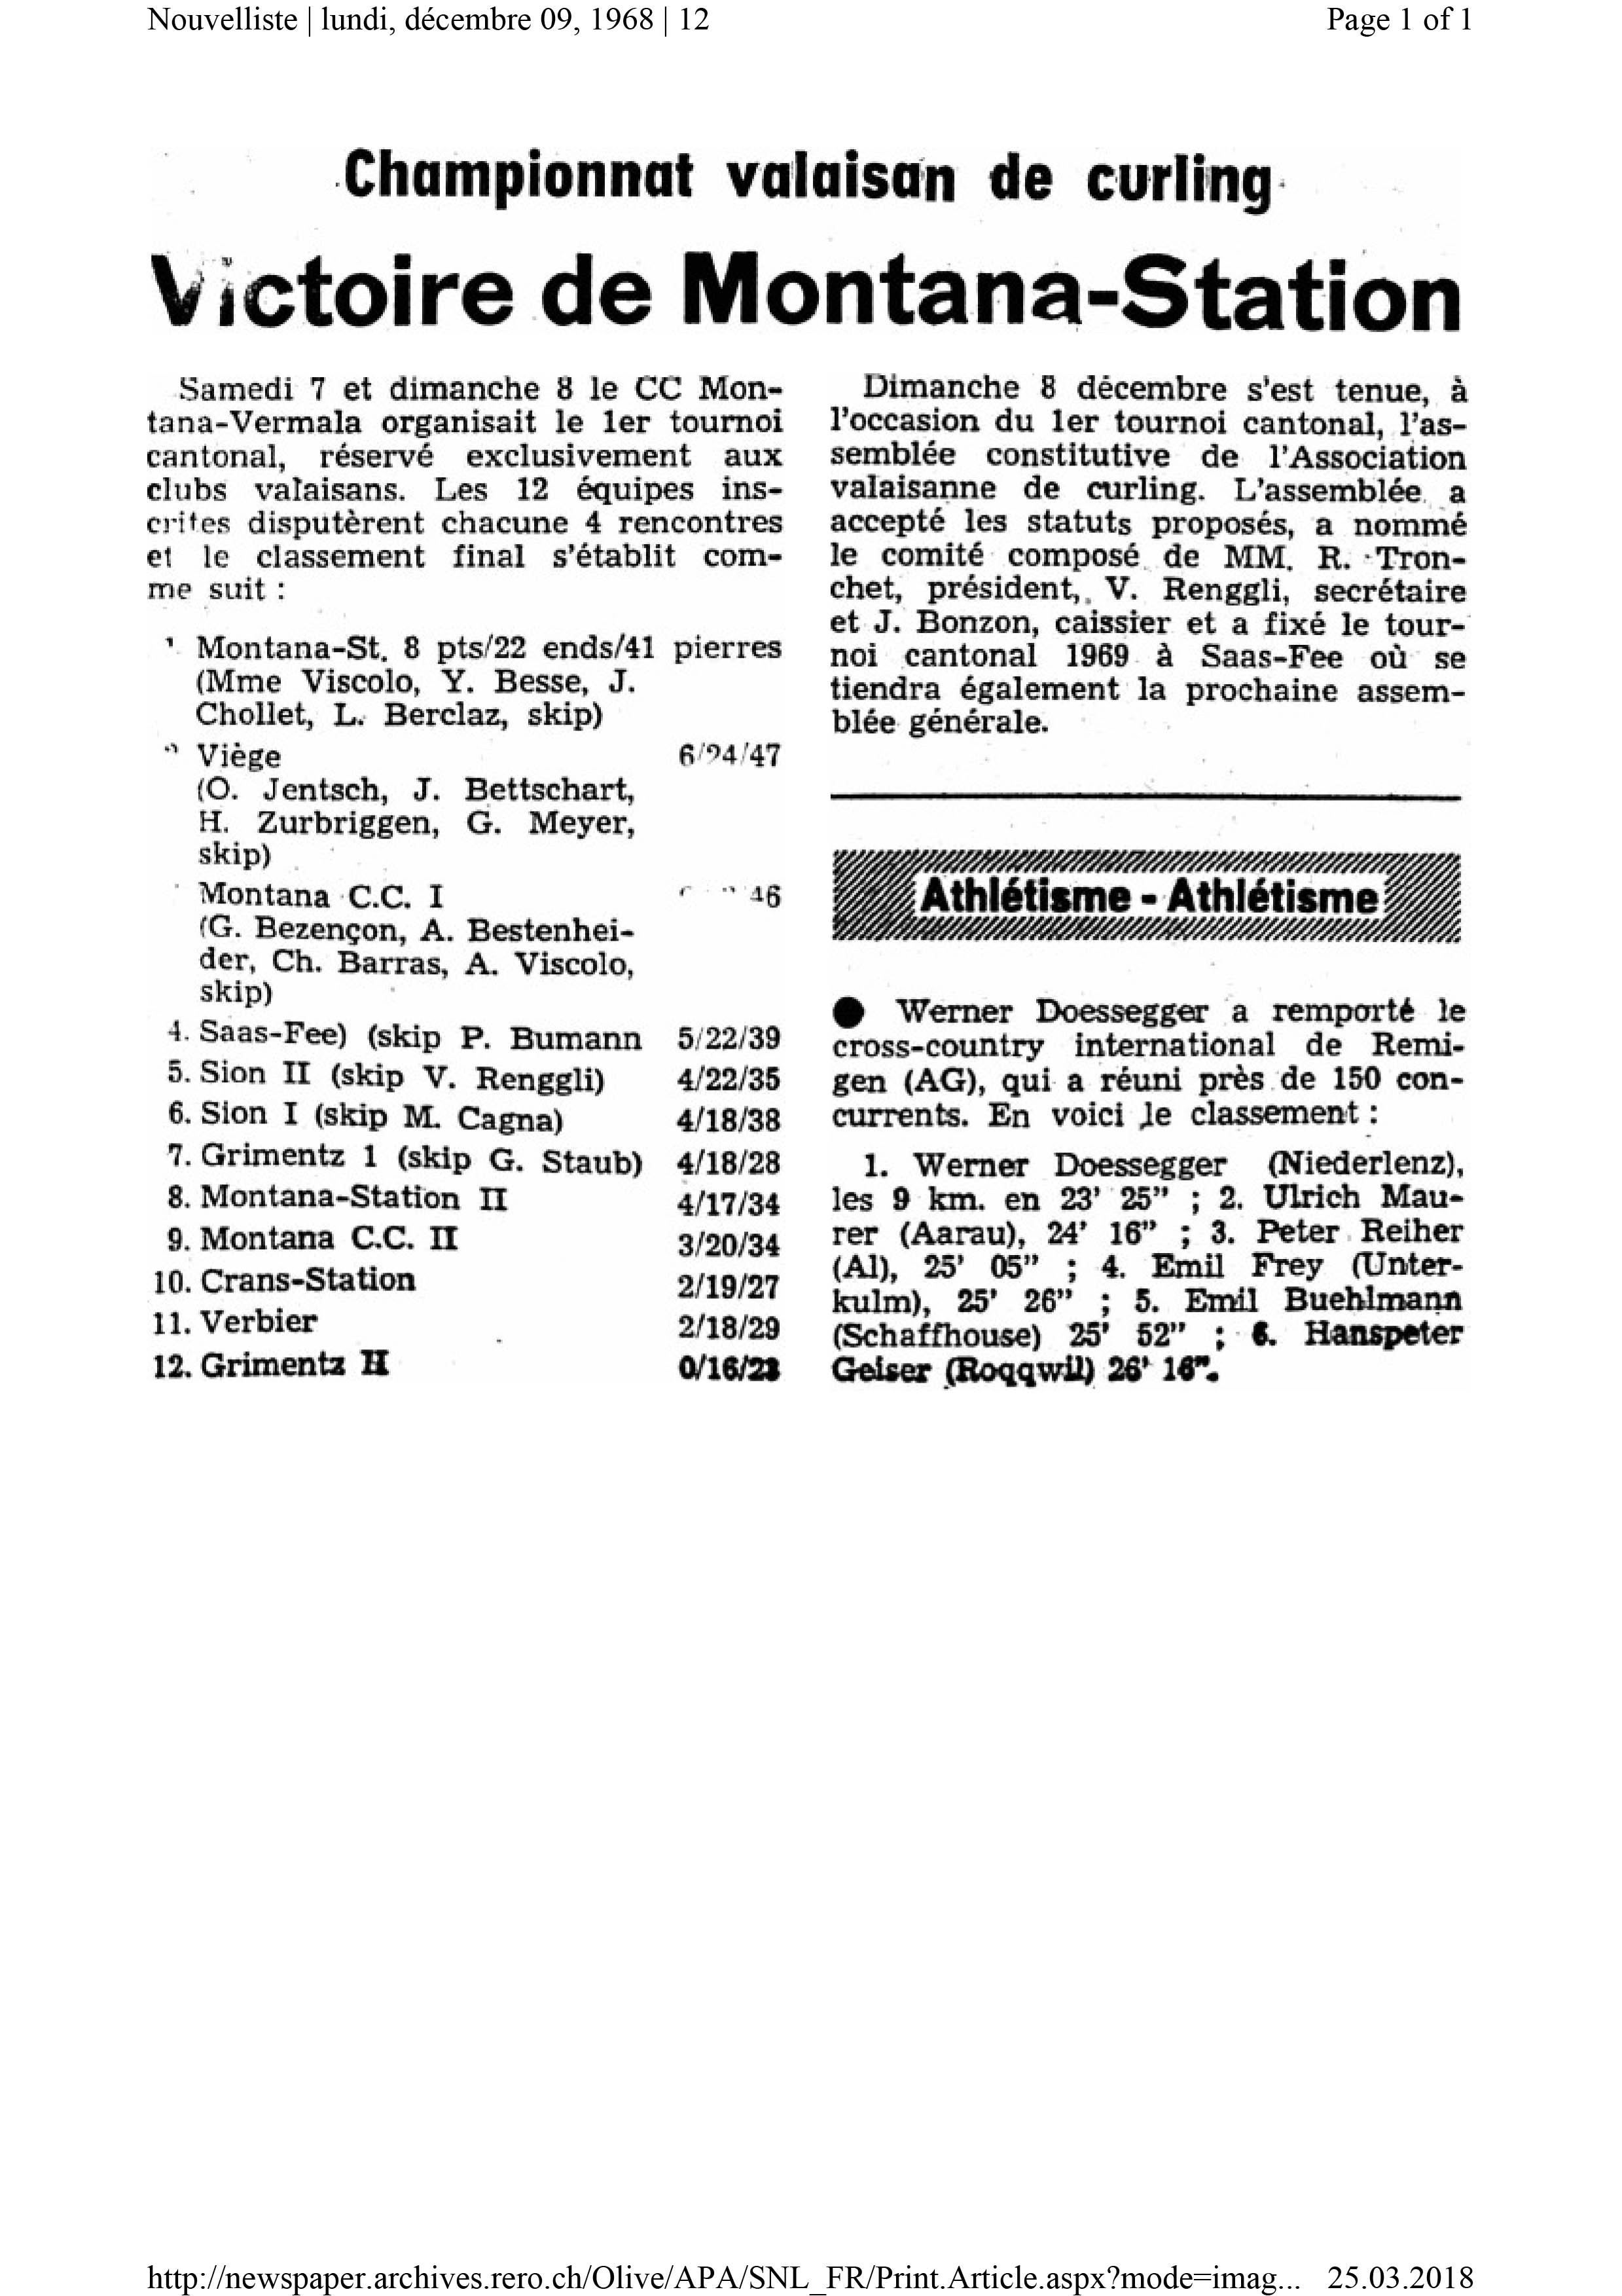 Championnat_VS_CURLING_1968.jpg